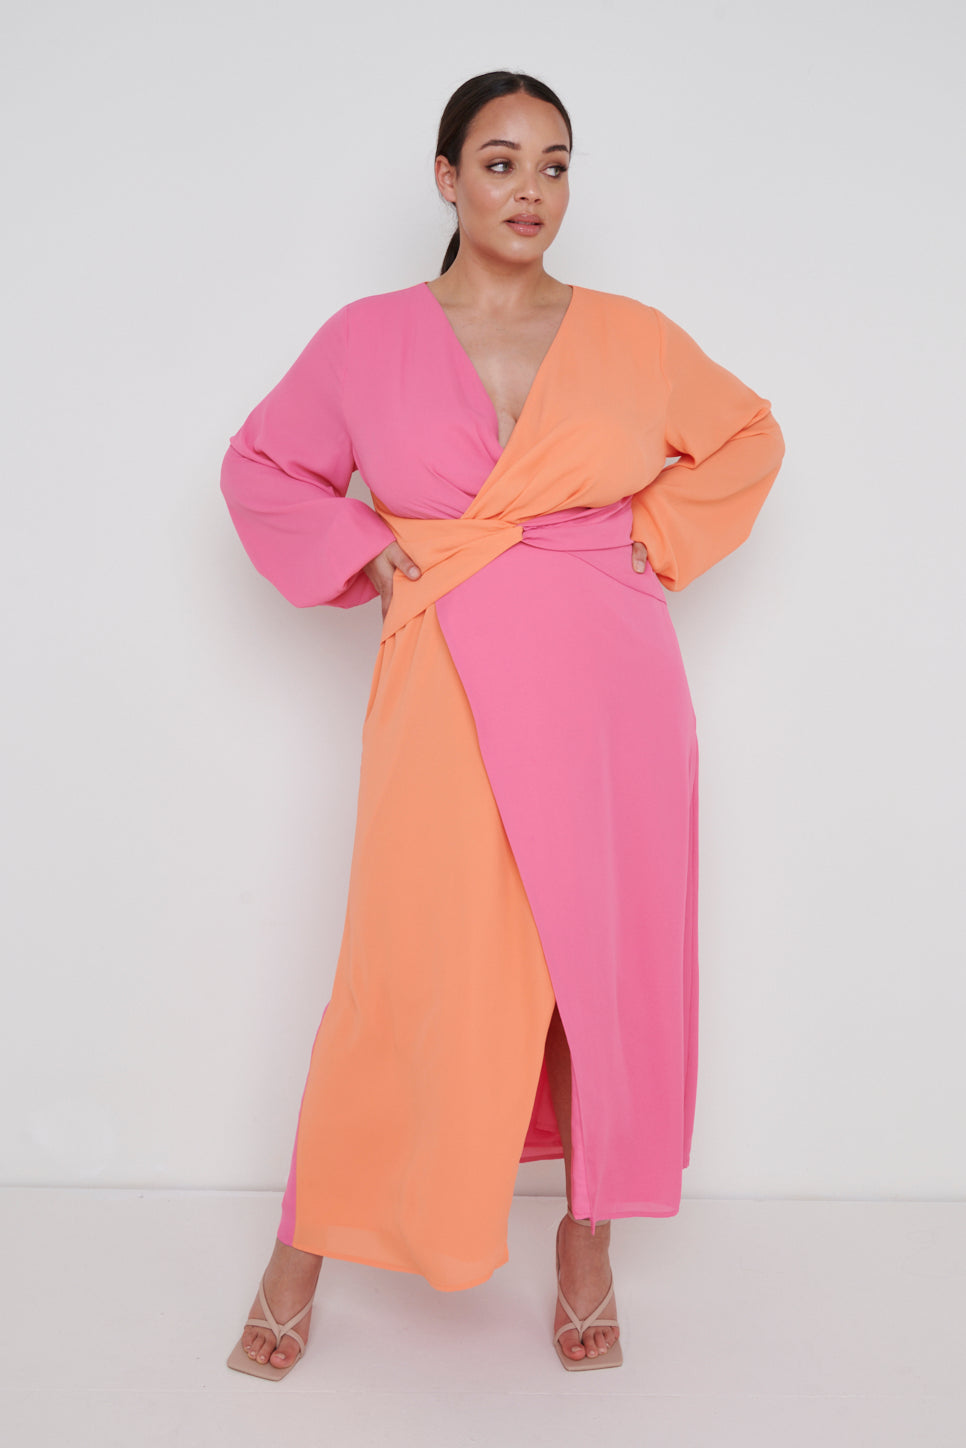 Frieda Knot Contrast Dress Curve - Orange and Pink, 26